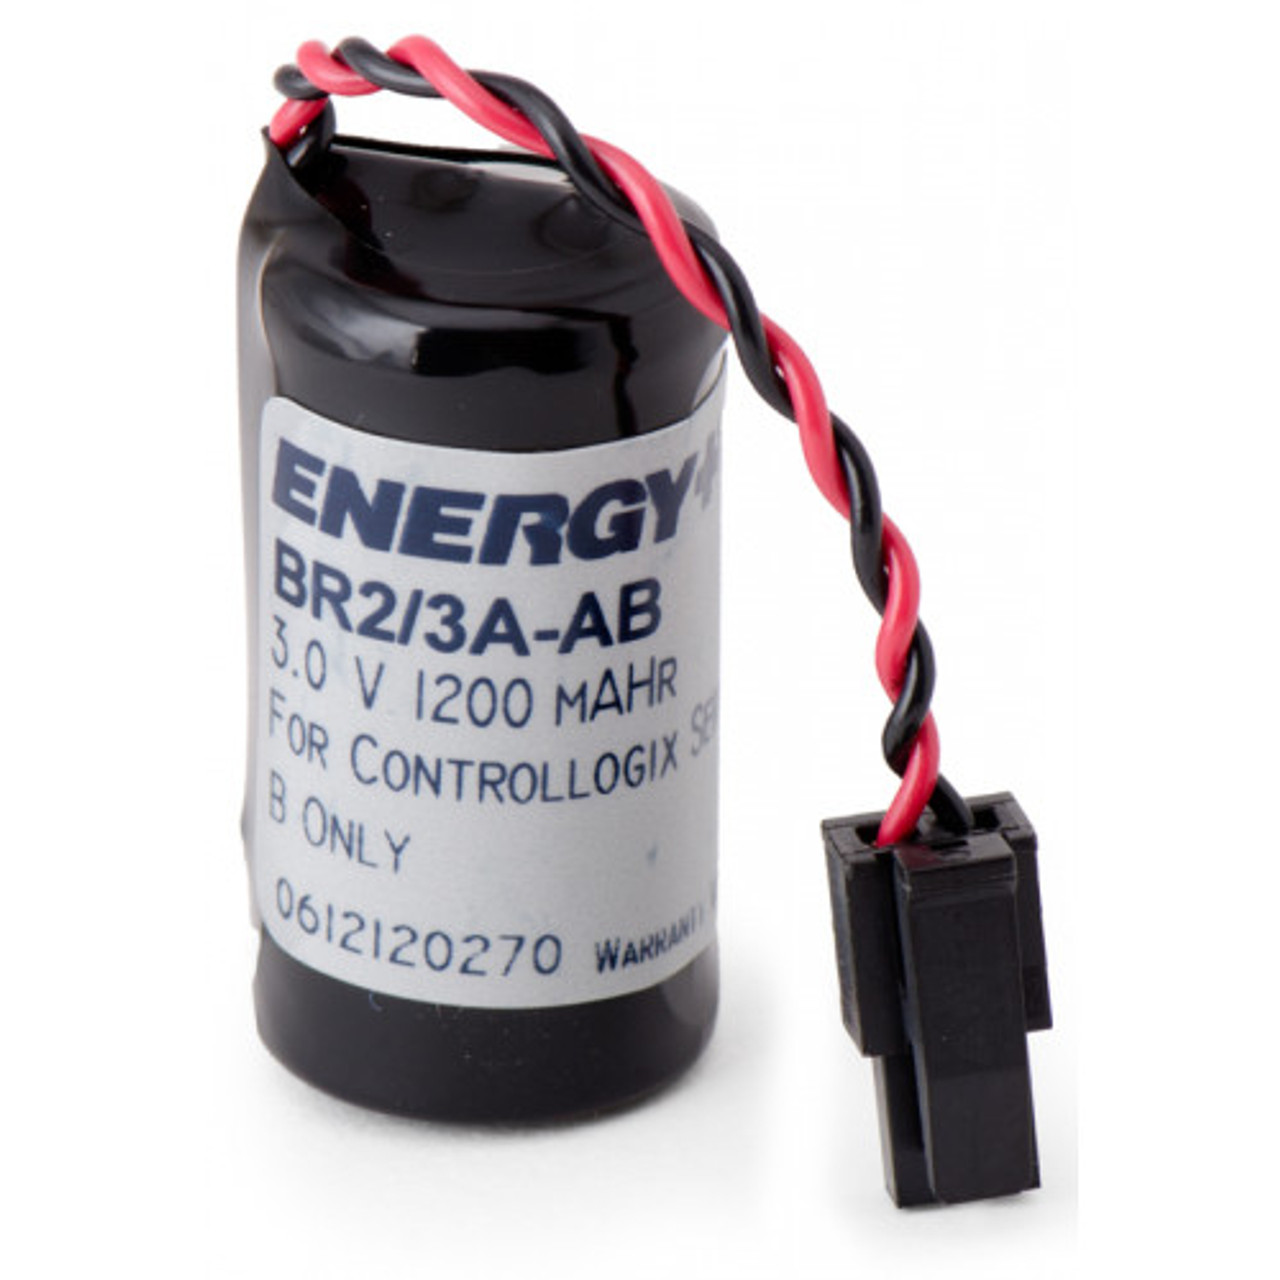 Energy+ BR2/3A-AB Battery